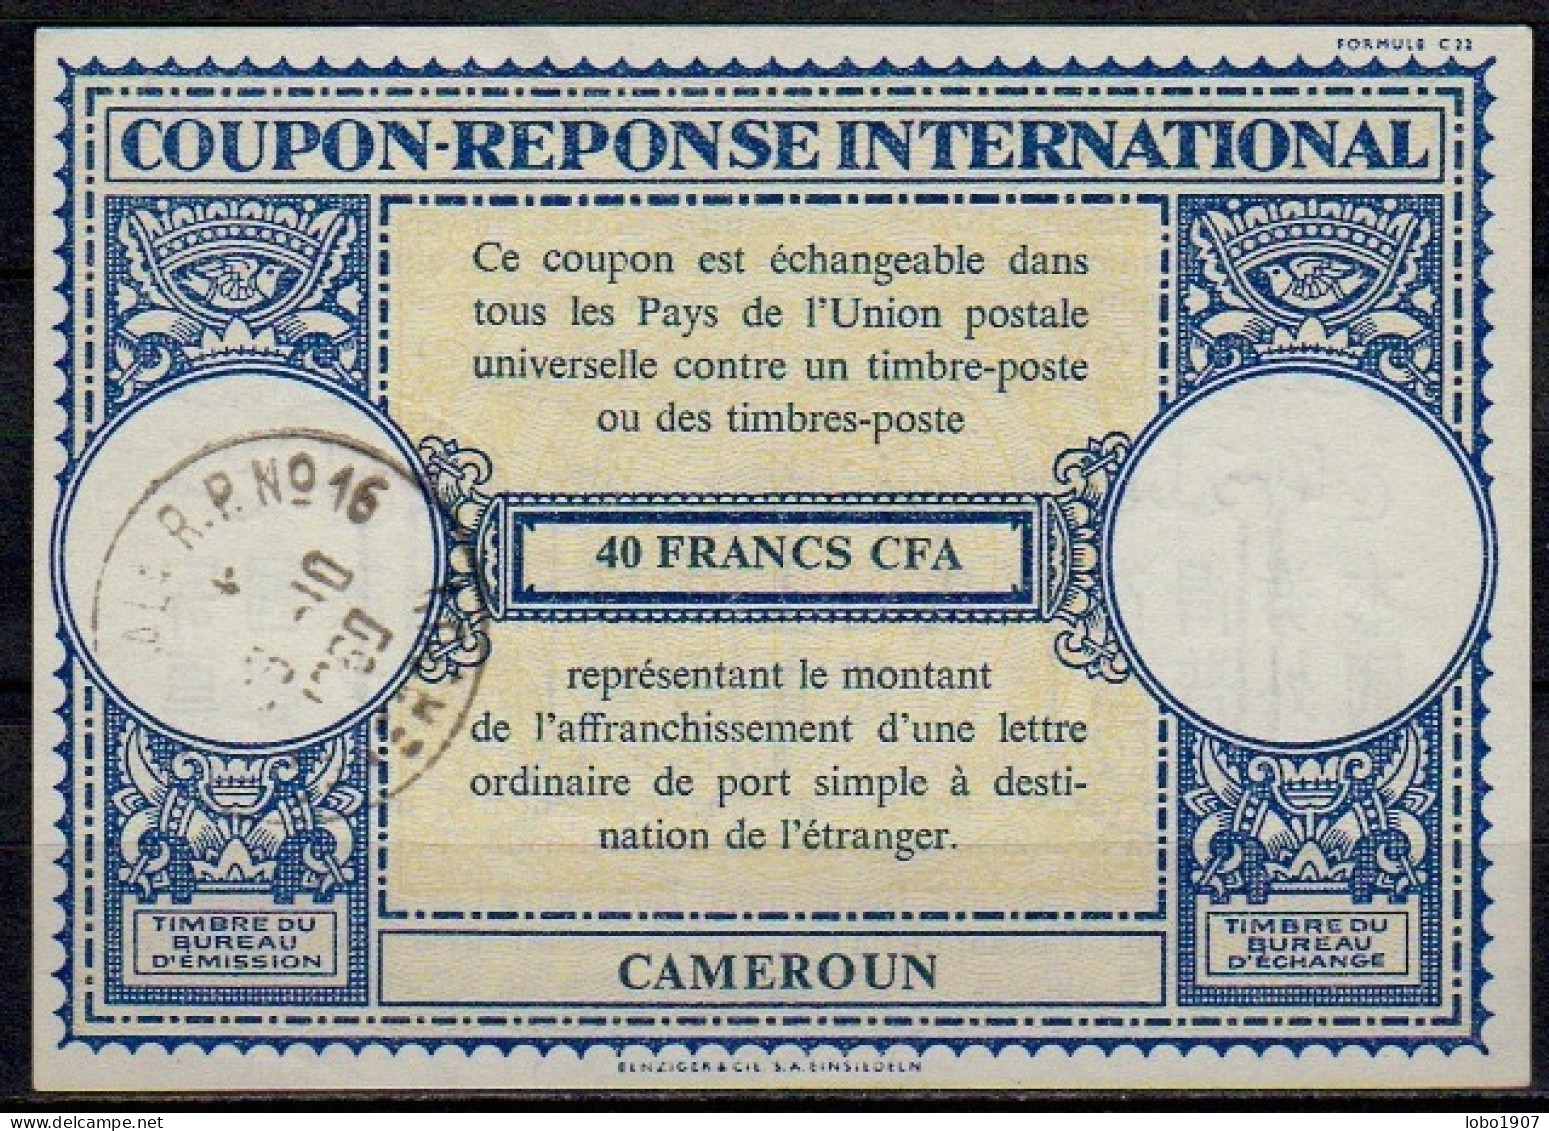 CAMEROUN, CAMEROON  Lo16n  40 FRANCS Int. Reply Coupon Reponse Antwortschein IRC IAS Cupon Respuesta  DOUALA 29.10.60 - Kamerun (1960-...)